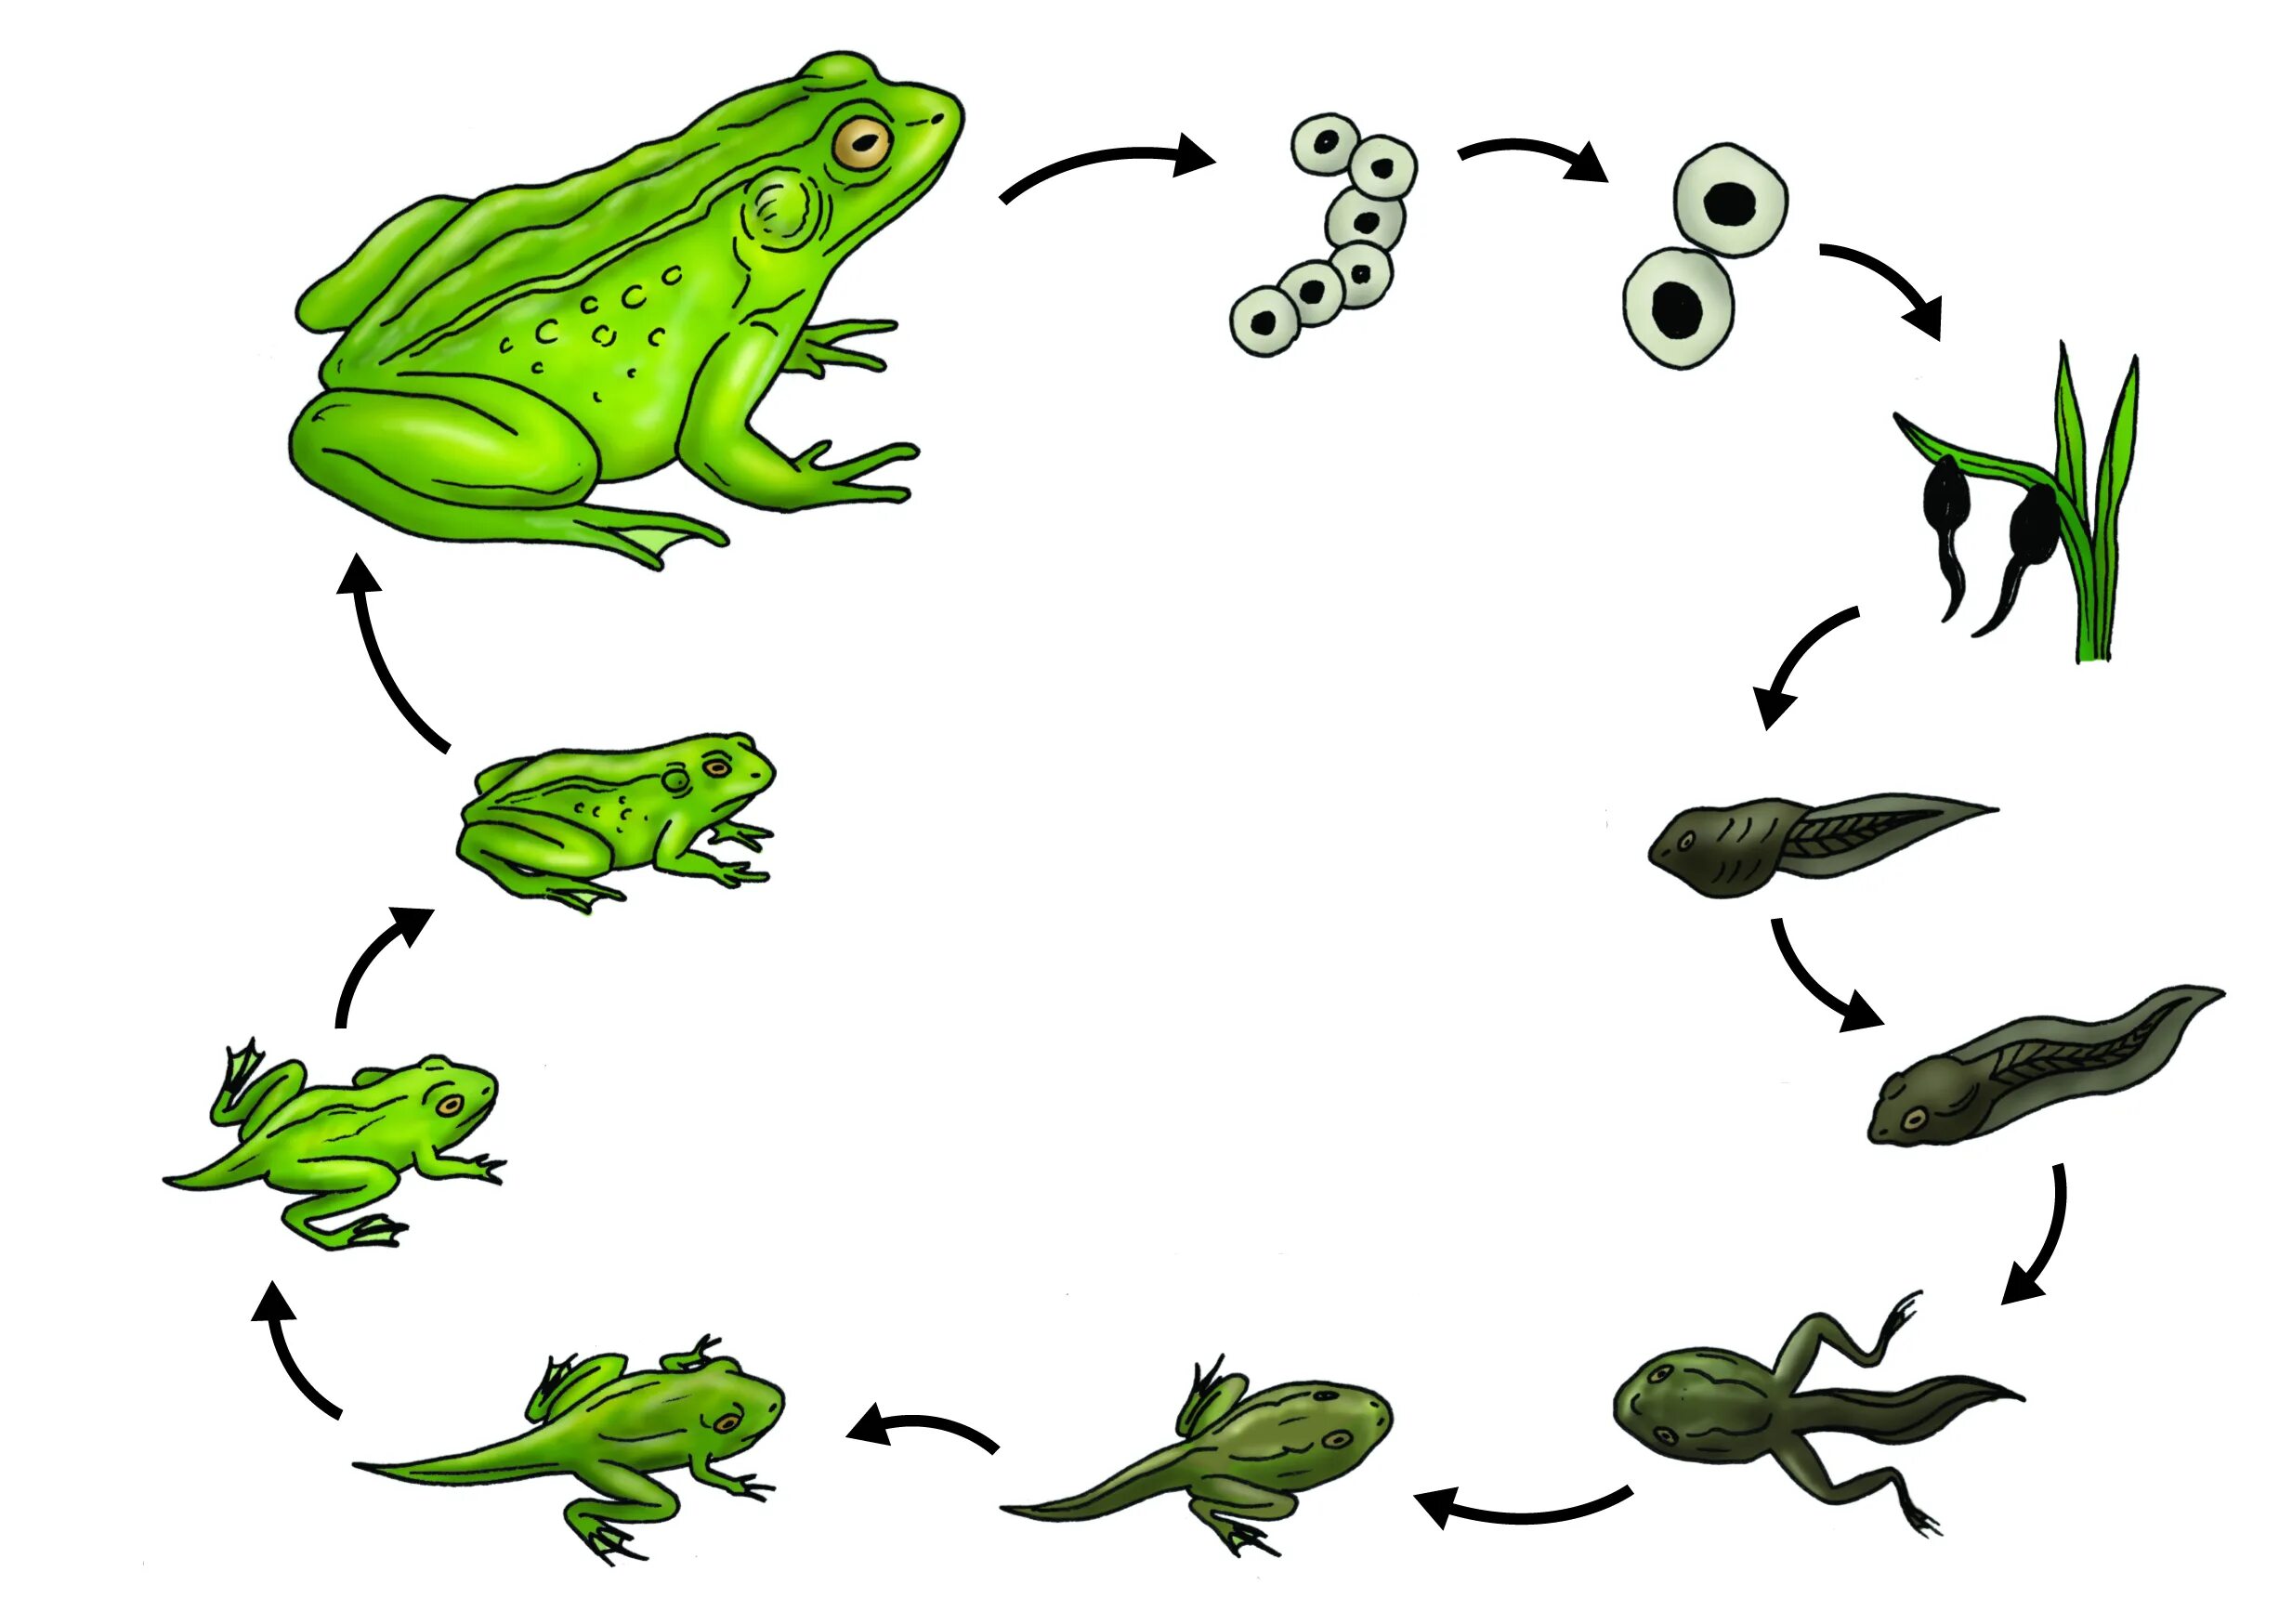 Жизненный цикл развития лягушки. Головастики лягушек цикл. Цикл развития лягушки схема. Жизненный цикл лягушки zhiznennyy tsikl Lyagushki.